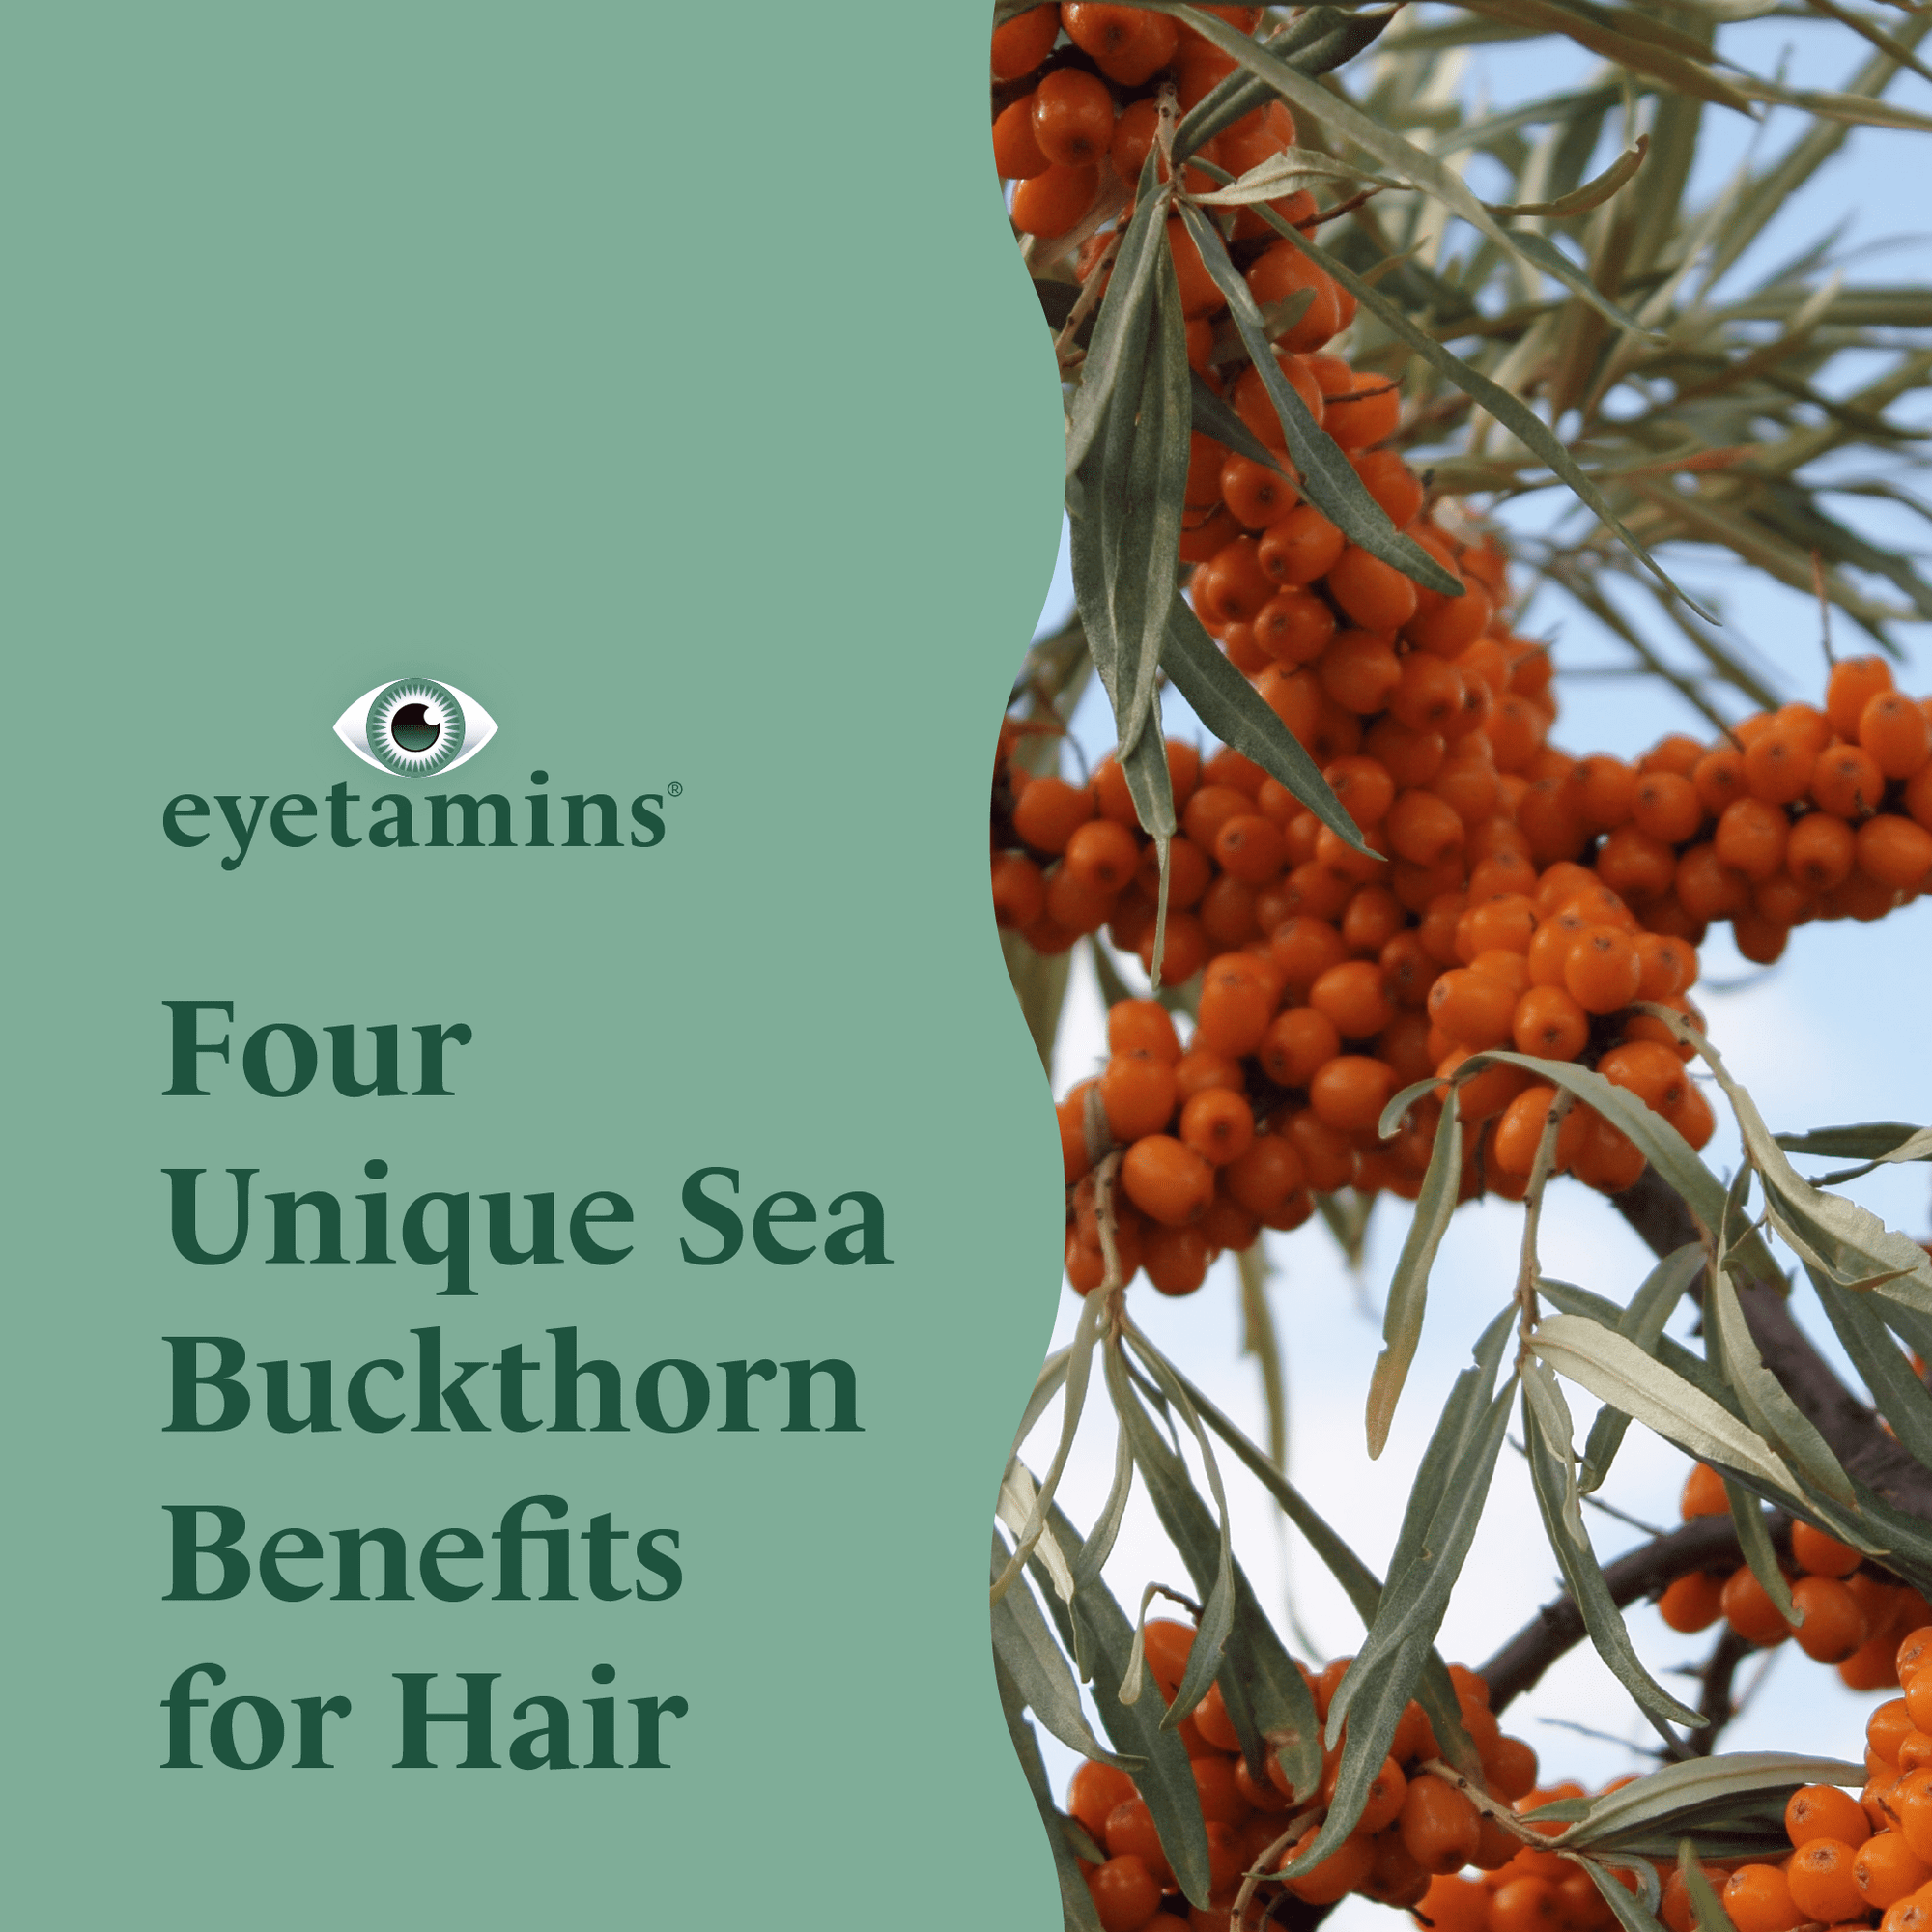 Eyetamins - Four Unique Sea Buckthorn Benefits for Hair